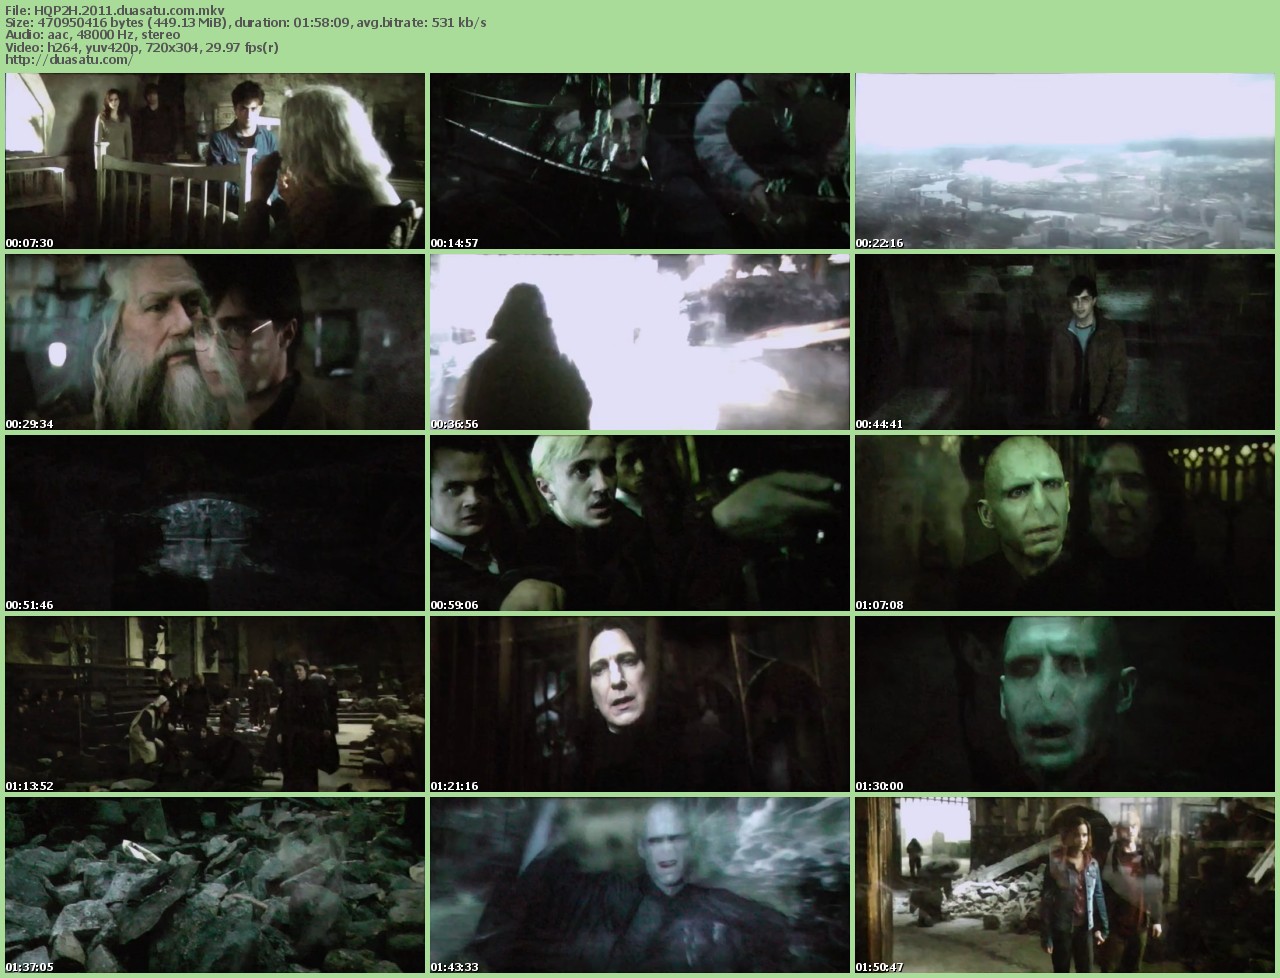 [MINI Super-HQ]_7.1.Harry.Potter.a nd.the.Deathly.Hallows.Part. 1.2010.1080p.Blu-ray.DTS.x26 4.One2loadup.com.part1.rar